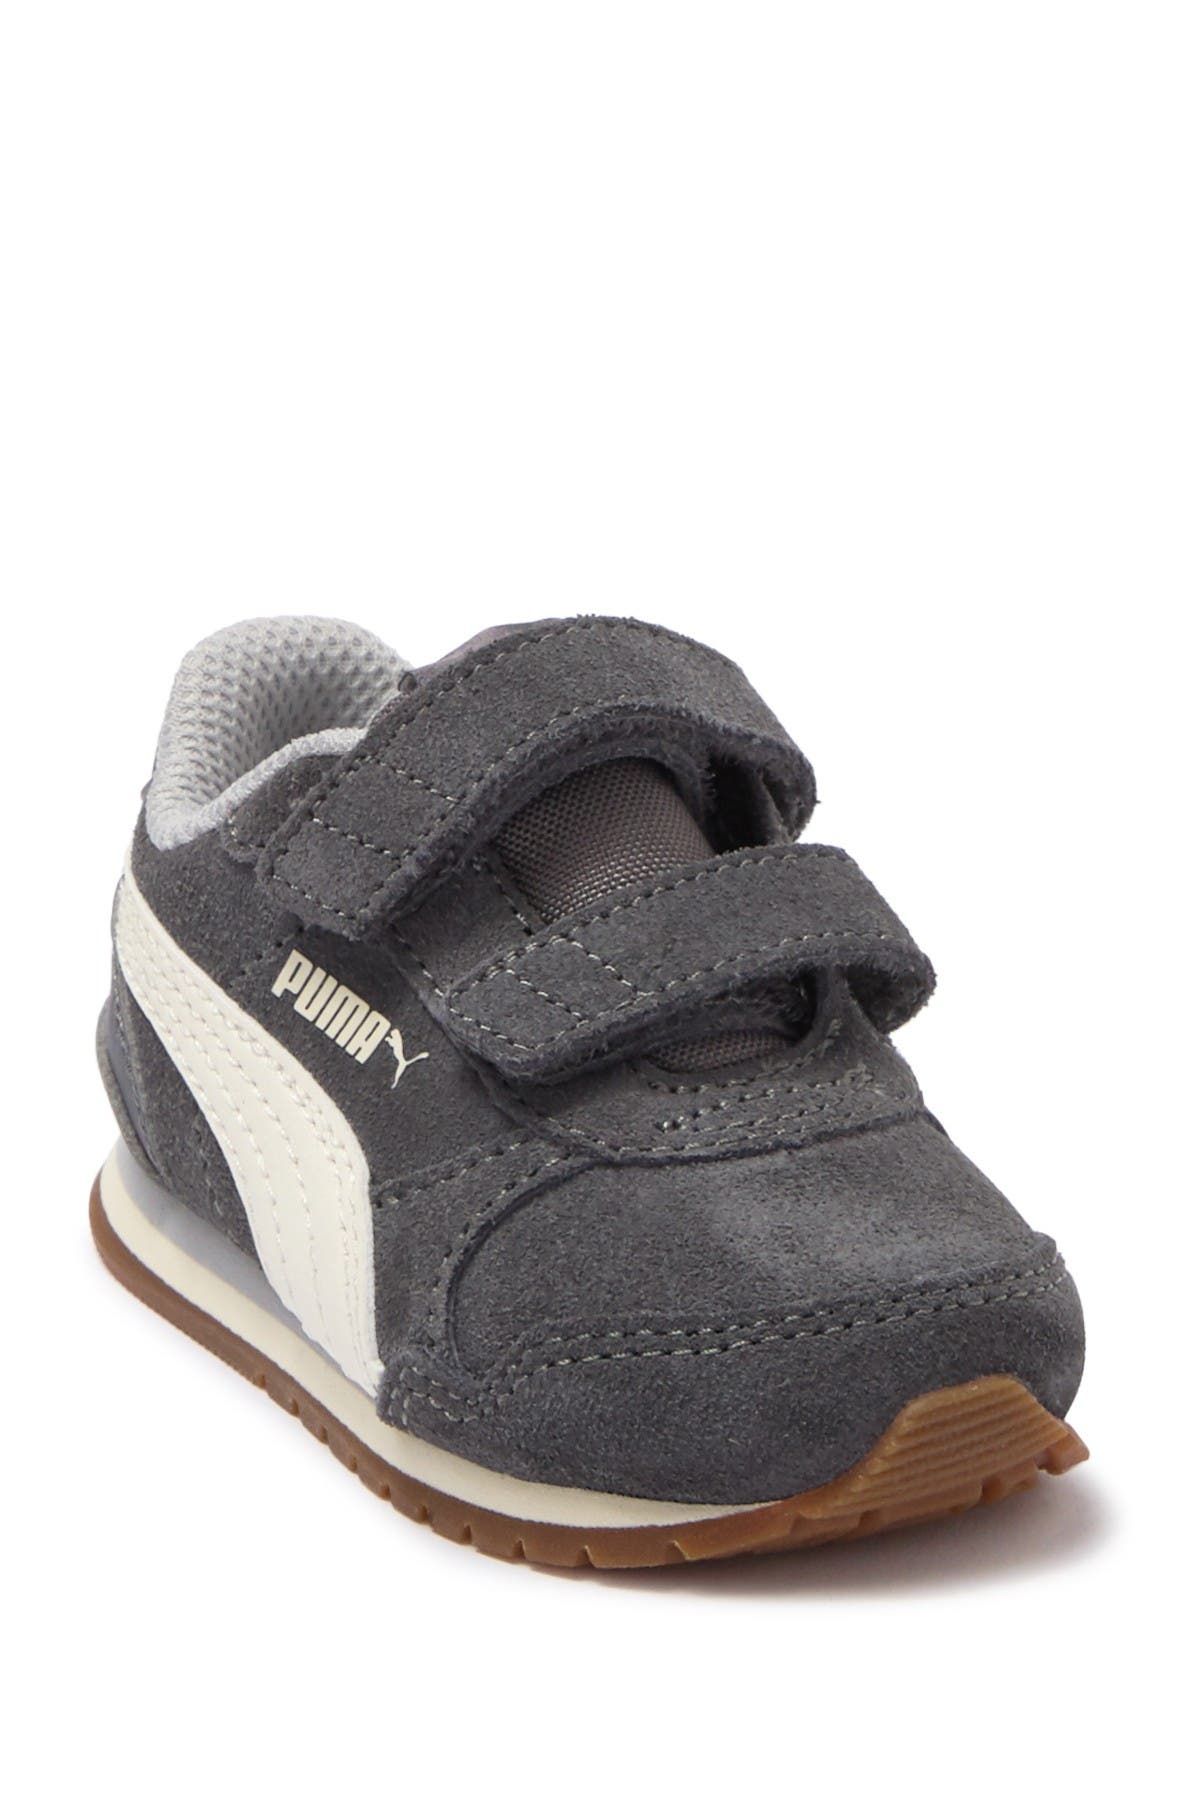 PUMA Kids' Boys' Shoes | Nordstrom Rack